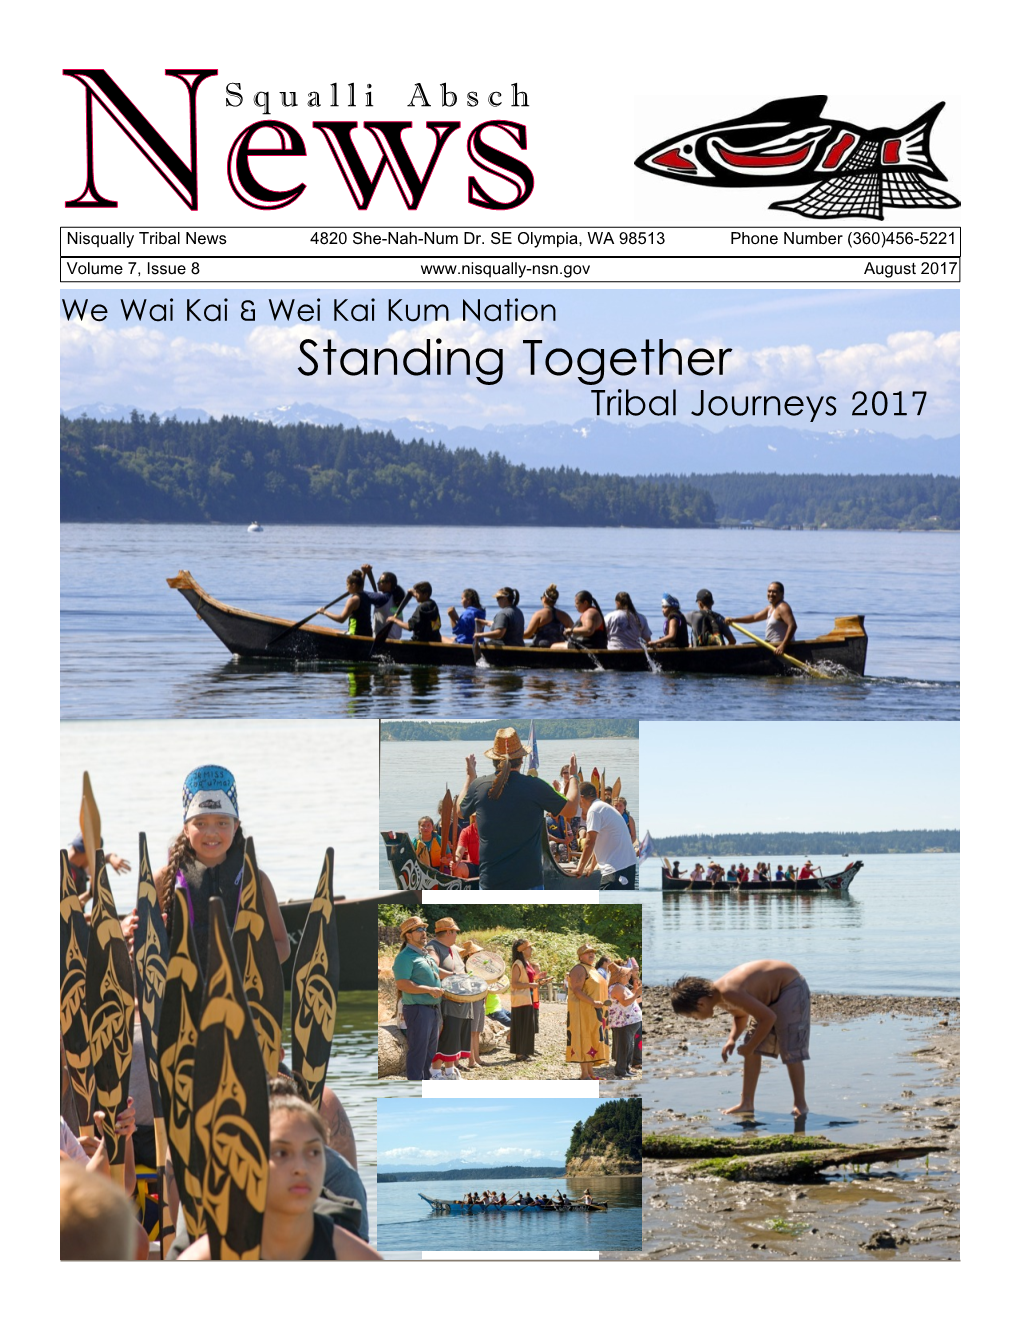 Standing Together Tribal Journeys 2017